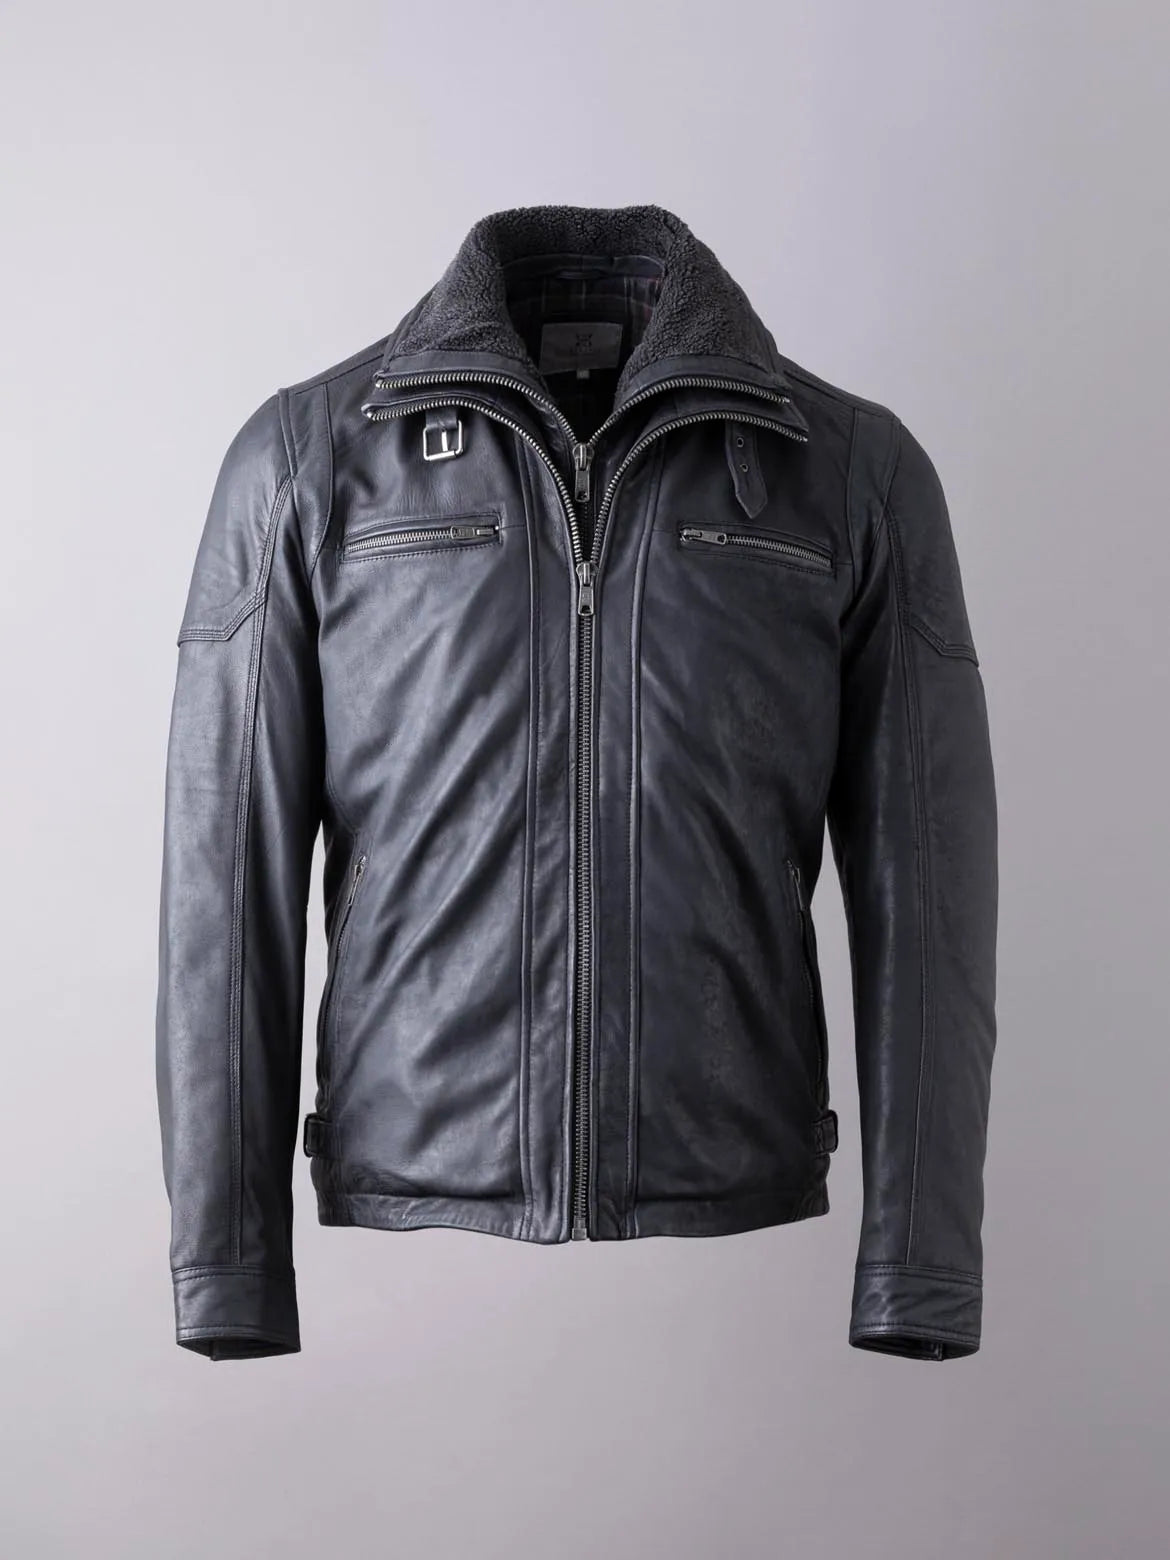 Lakeland Derwent Leather Coat - Black